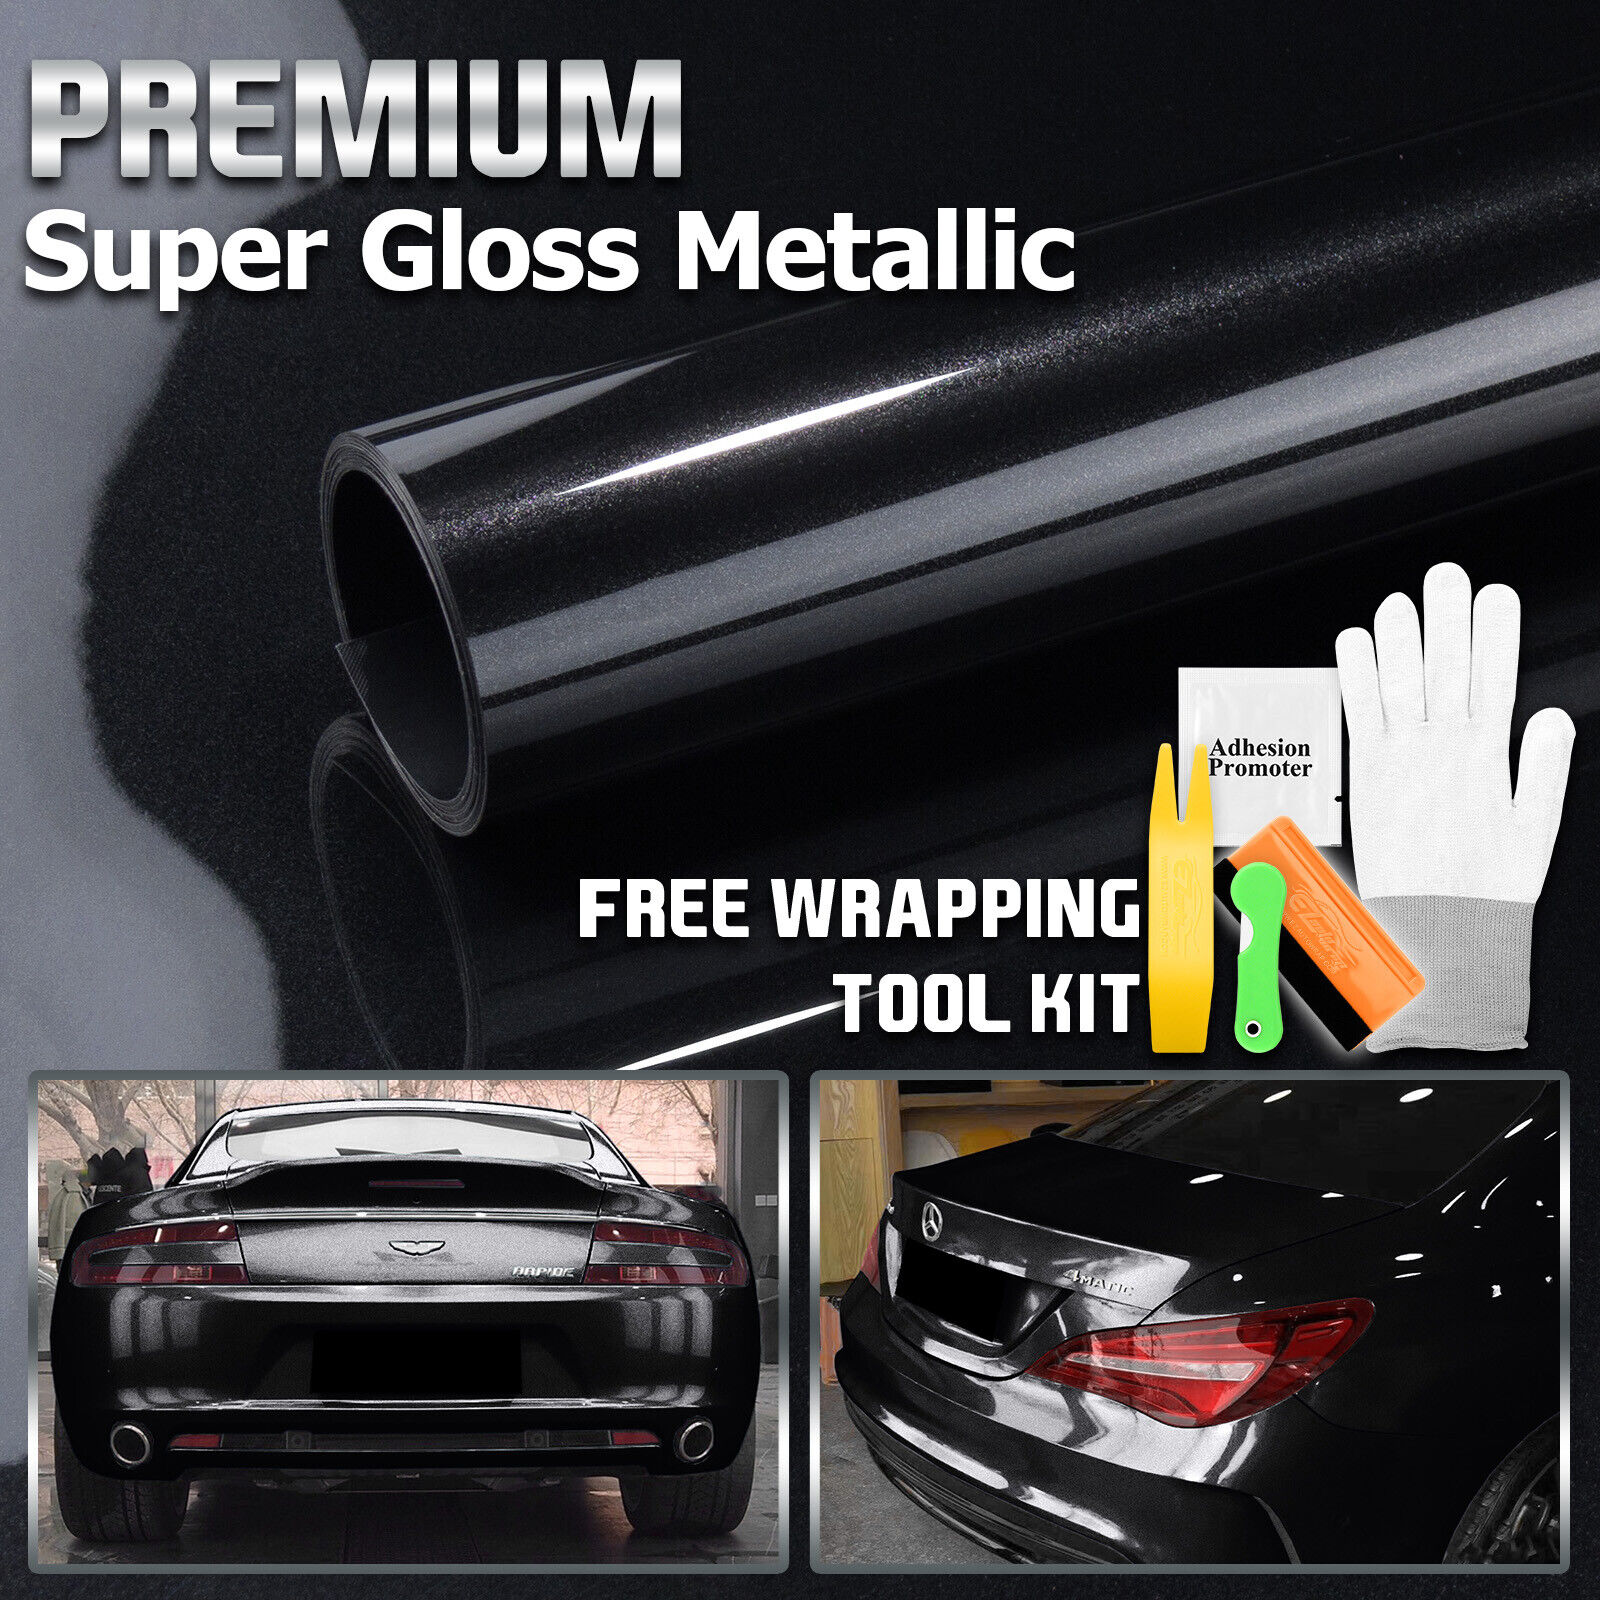 Premium Super Gloss Metallic Vinyl Car Wrap Sticker Decal Bubble Free Sheet Film